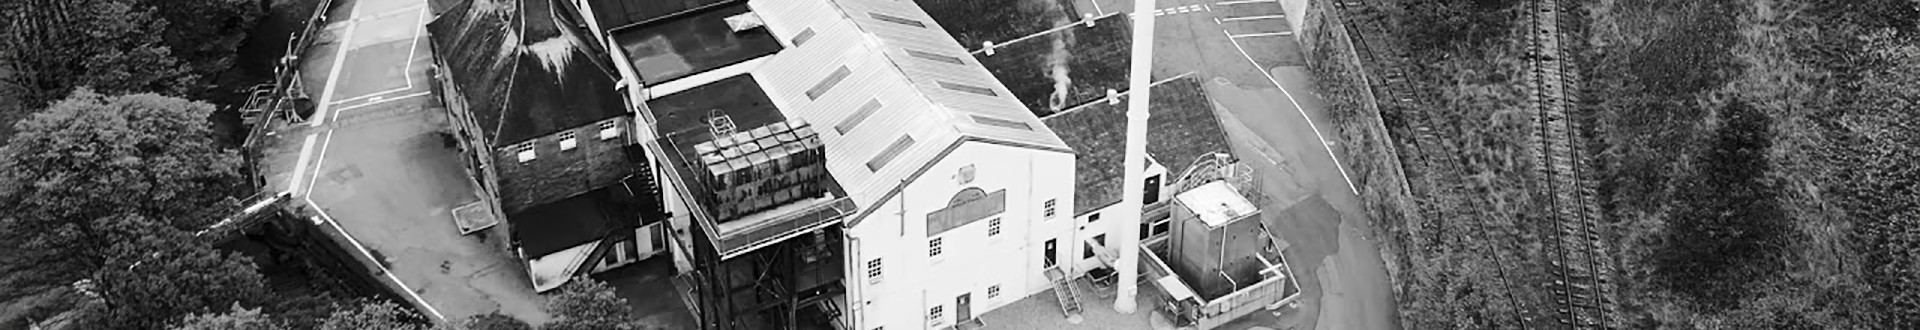 Strathmill Distillery